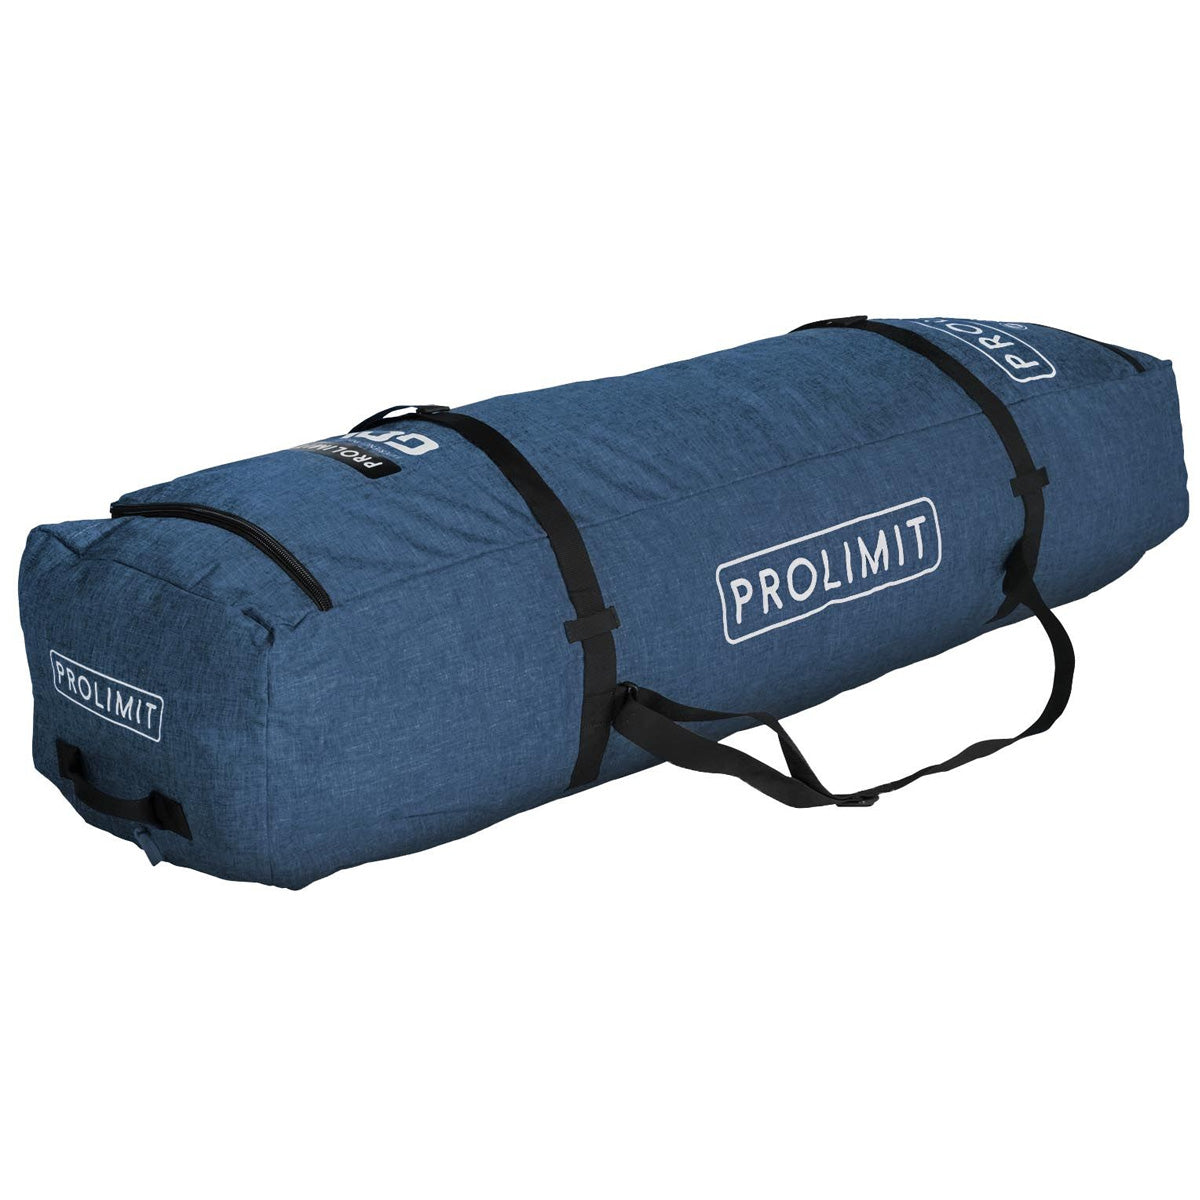 Prolimit Golf Ultralight Board Bag